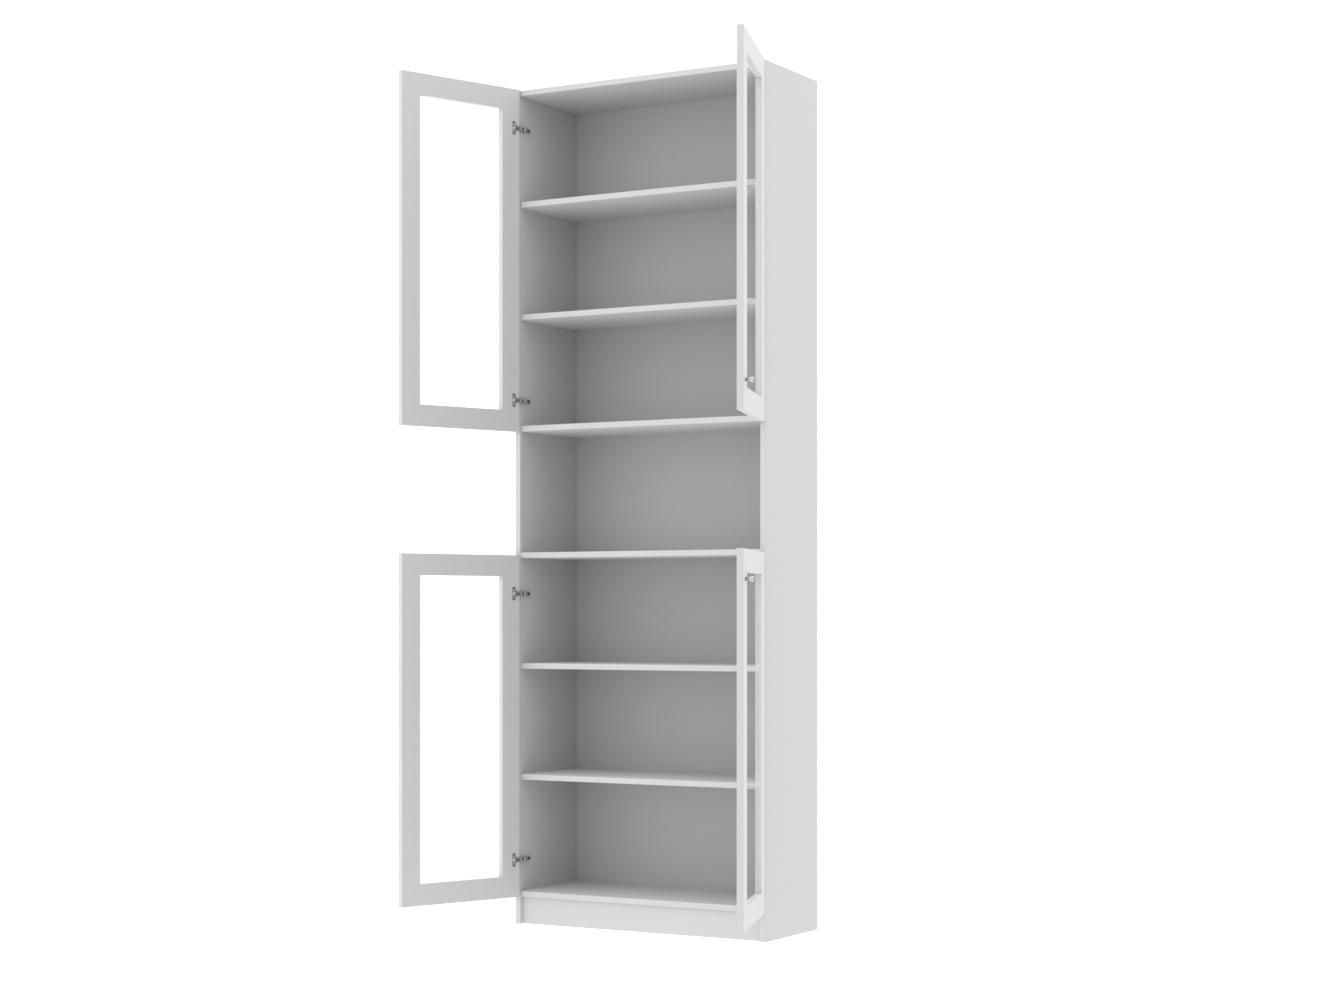  Книжный шкаф Билли 386 white ИКЕА (IKEA) изображение товара